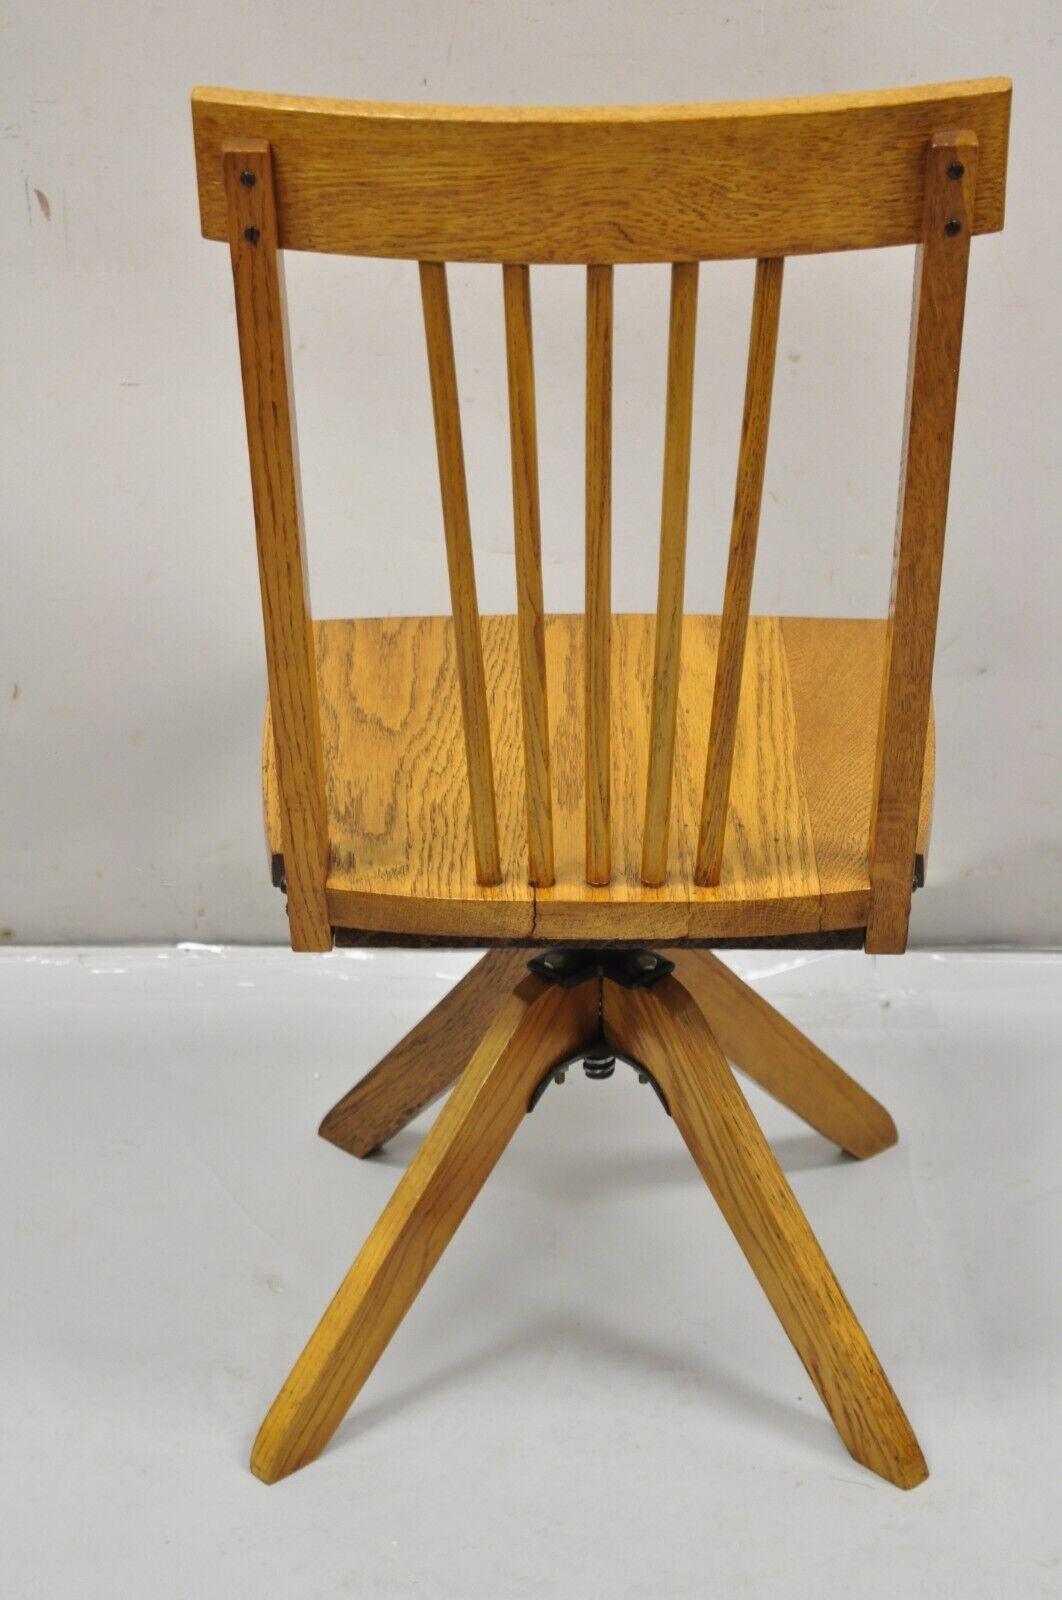 Vintage Mission Arts & Crafts Oak Wood Child’s School Desk Chair For Sale 2